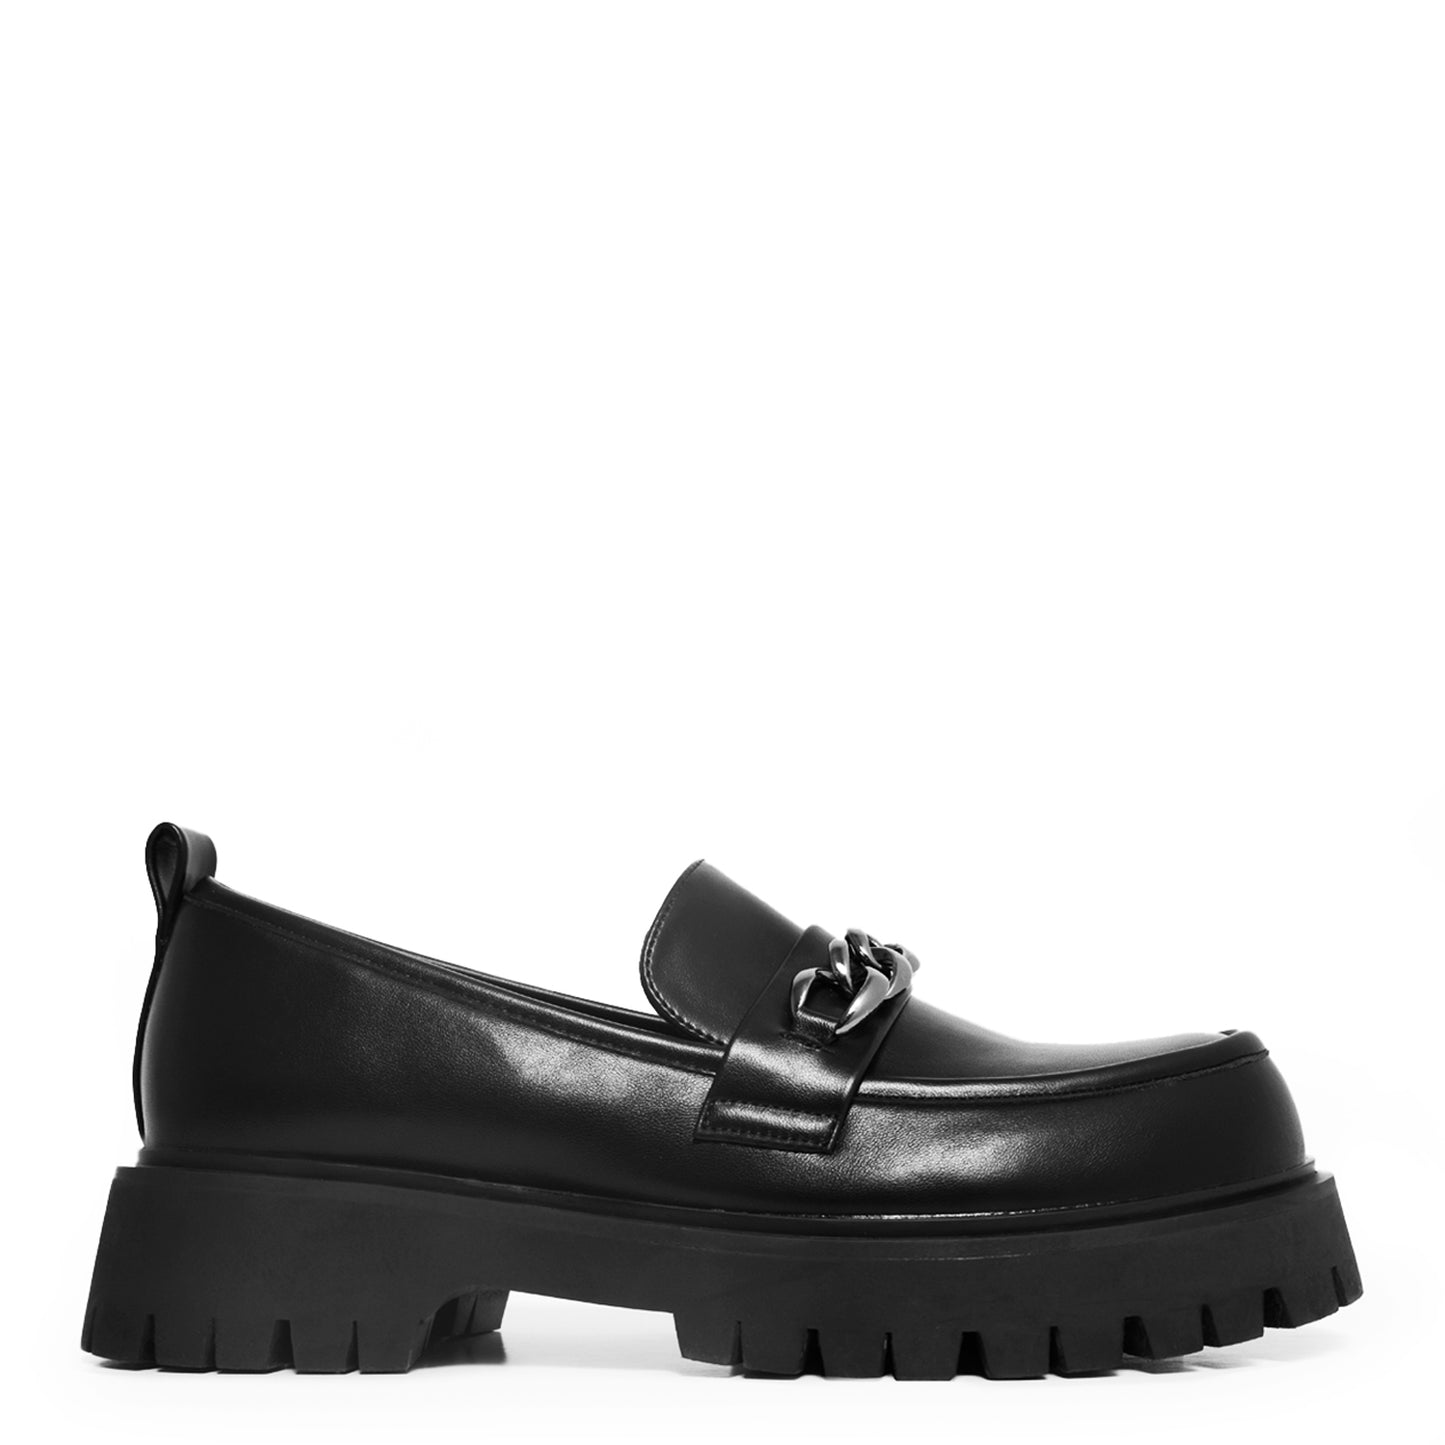 Shenron Men's Chain Black Loafers - Shoes - KOI Footwear - Black - Main View